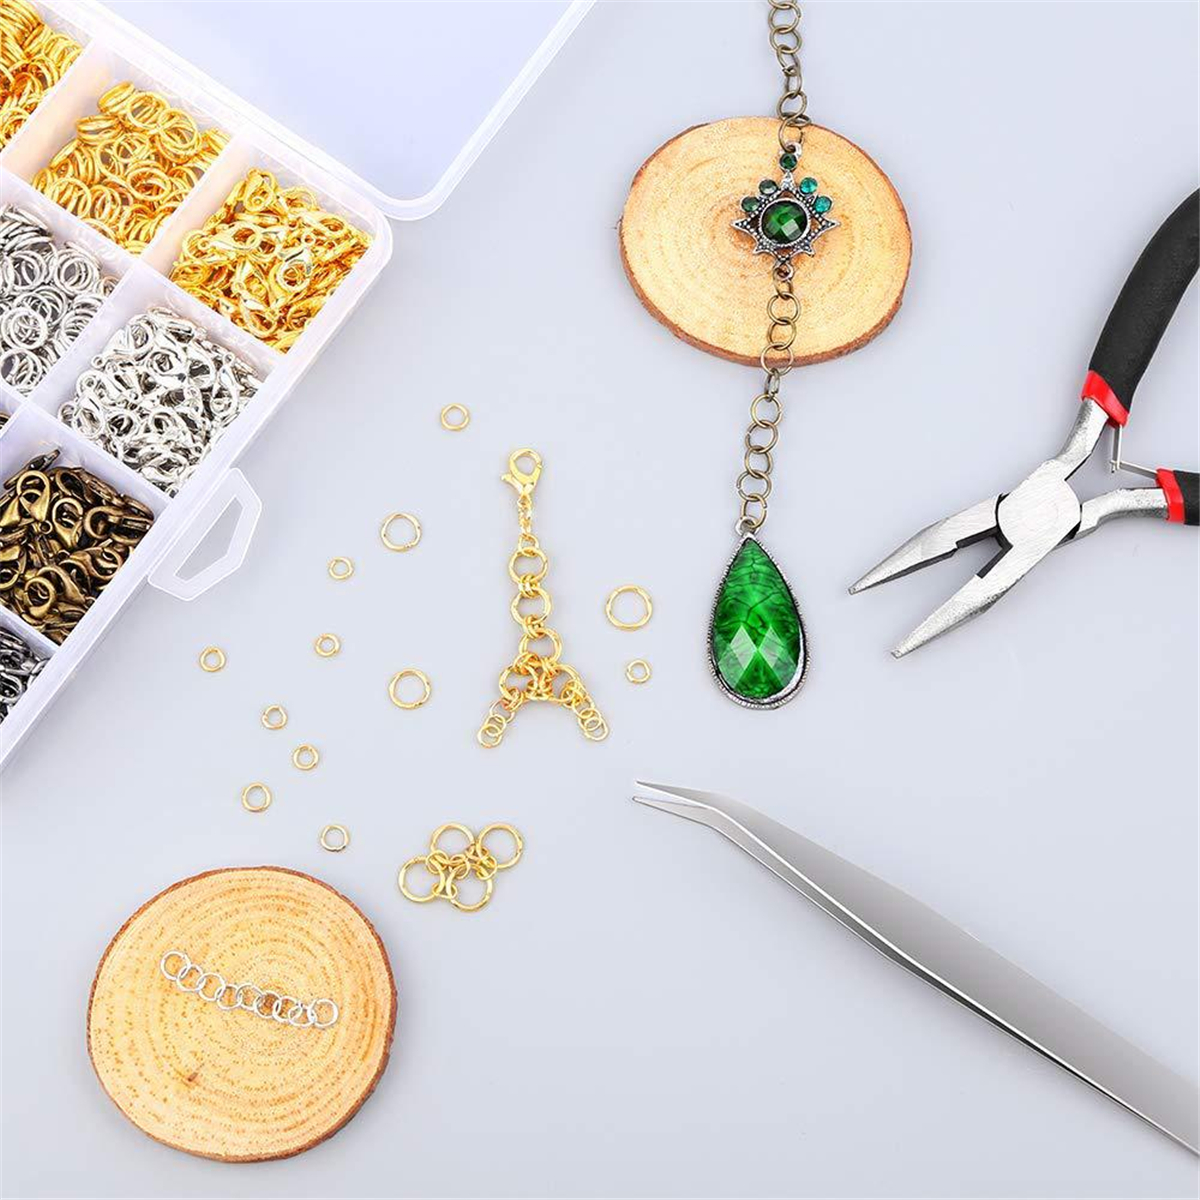 22Pcs-Jewelry-Making-Tools-Repair-Kit-Jewelry-Pliers-Beading-Wire-Set-DIY-Craft-1713659-16